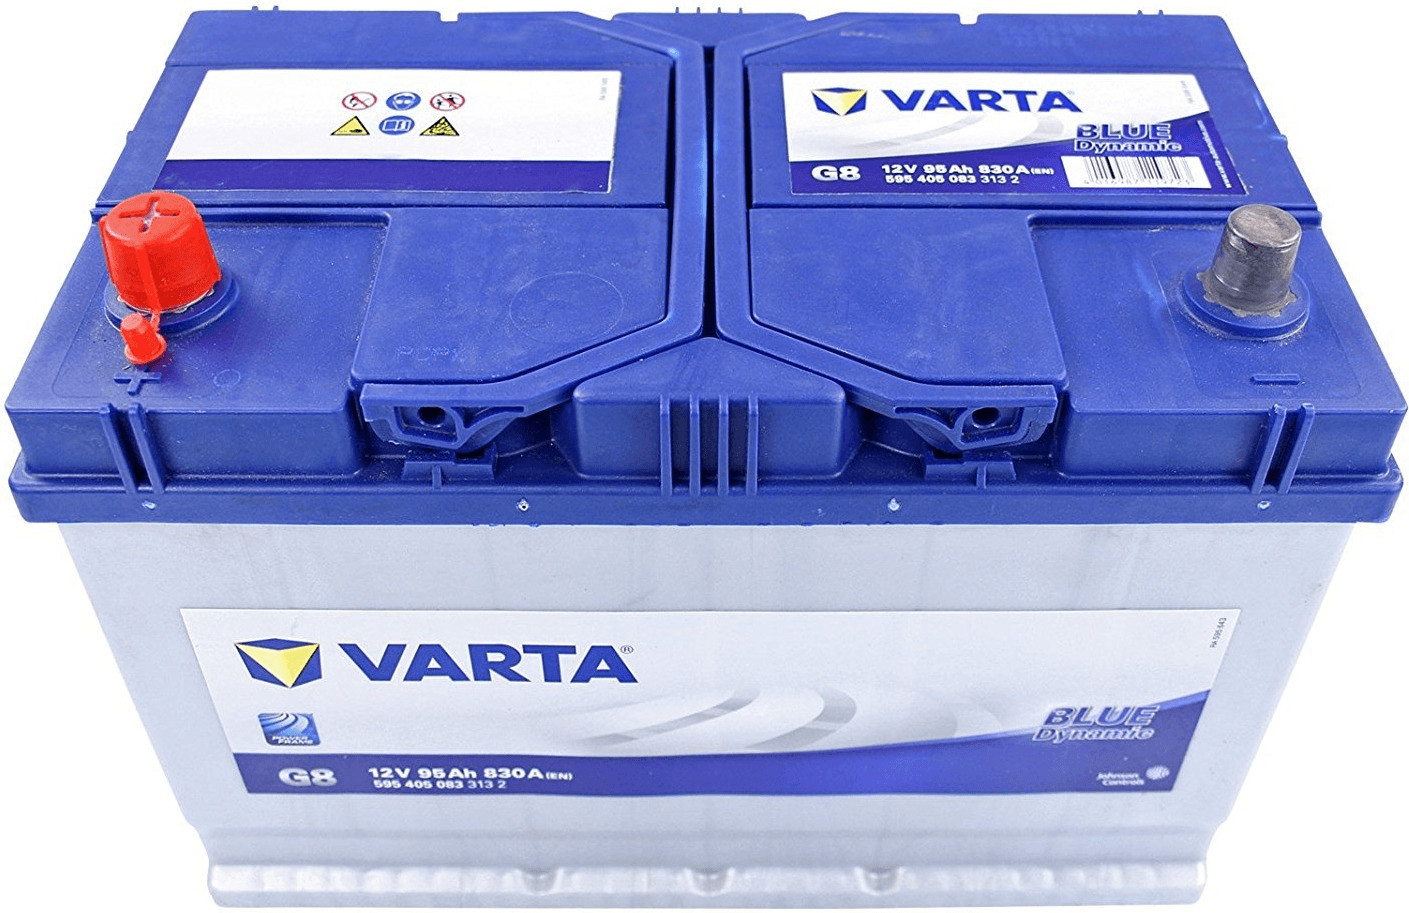 VARTA Batterie Blur Dynamic G8 595.405.083 12V/95AH